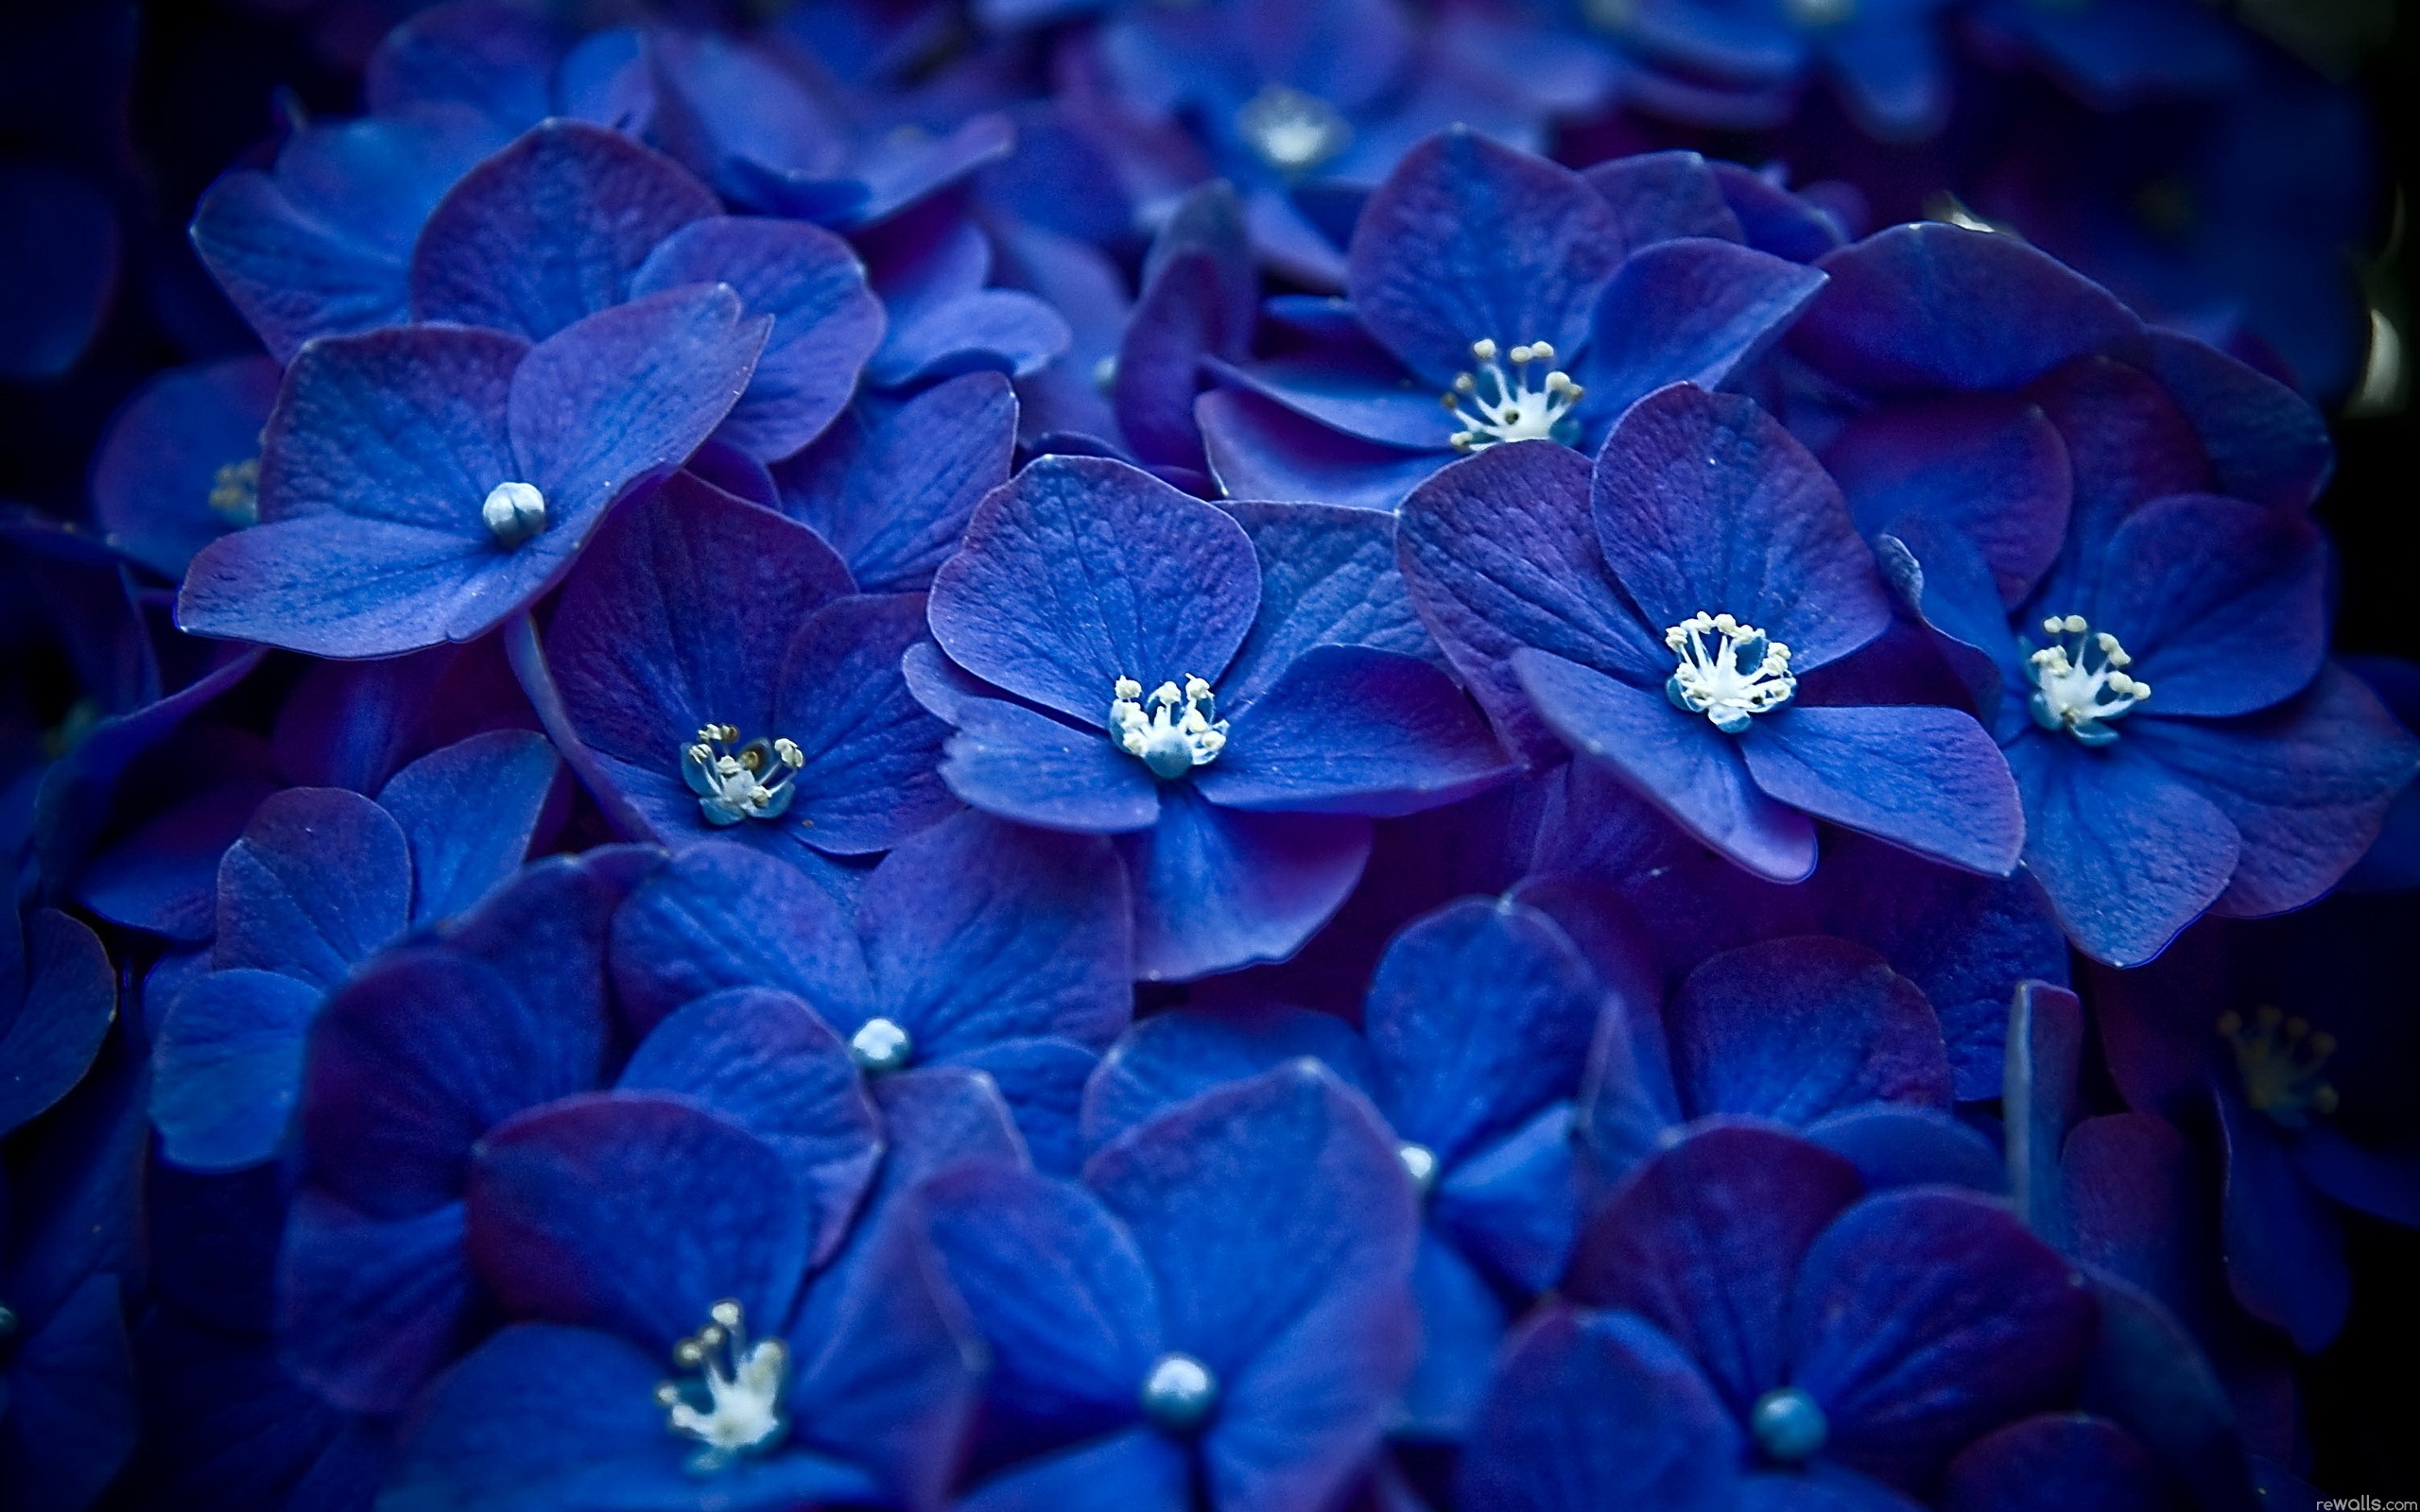  flowers macro watermark blue flowers hydrangeas wallpaper background 2560x1600